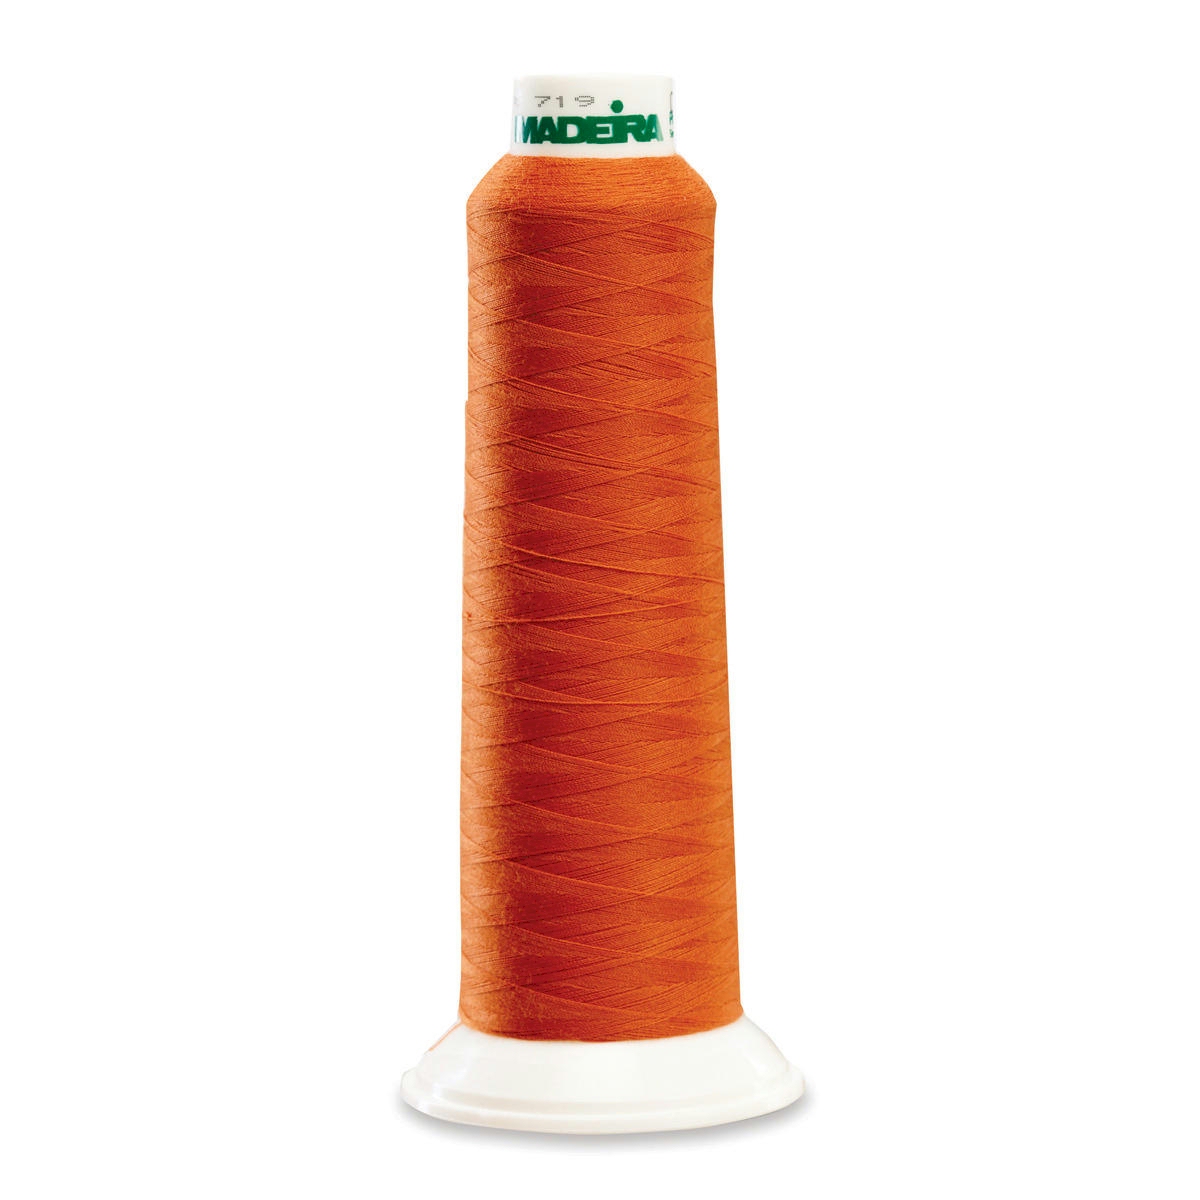 Madeira Aerolock Premium Serger Thread 2000 Yard Cone - PUMPKIN